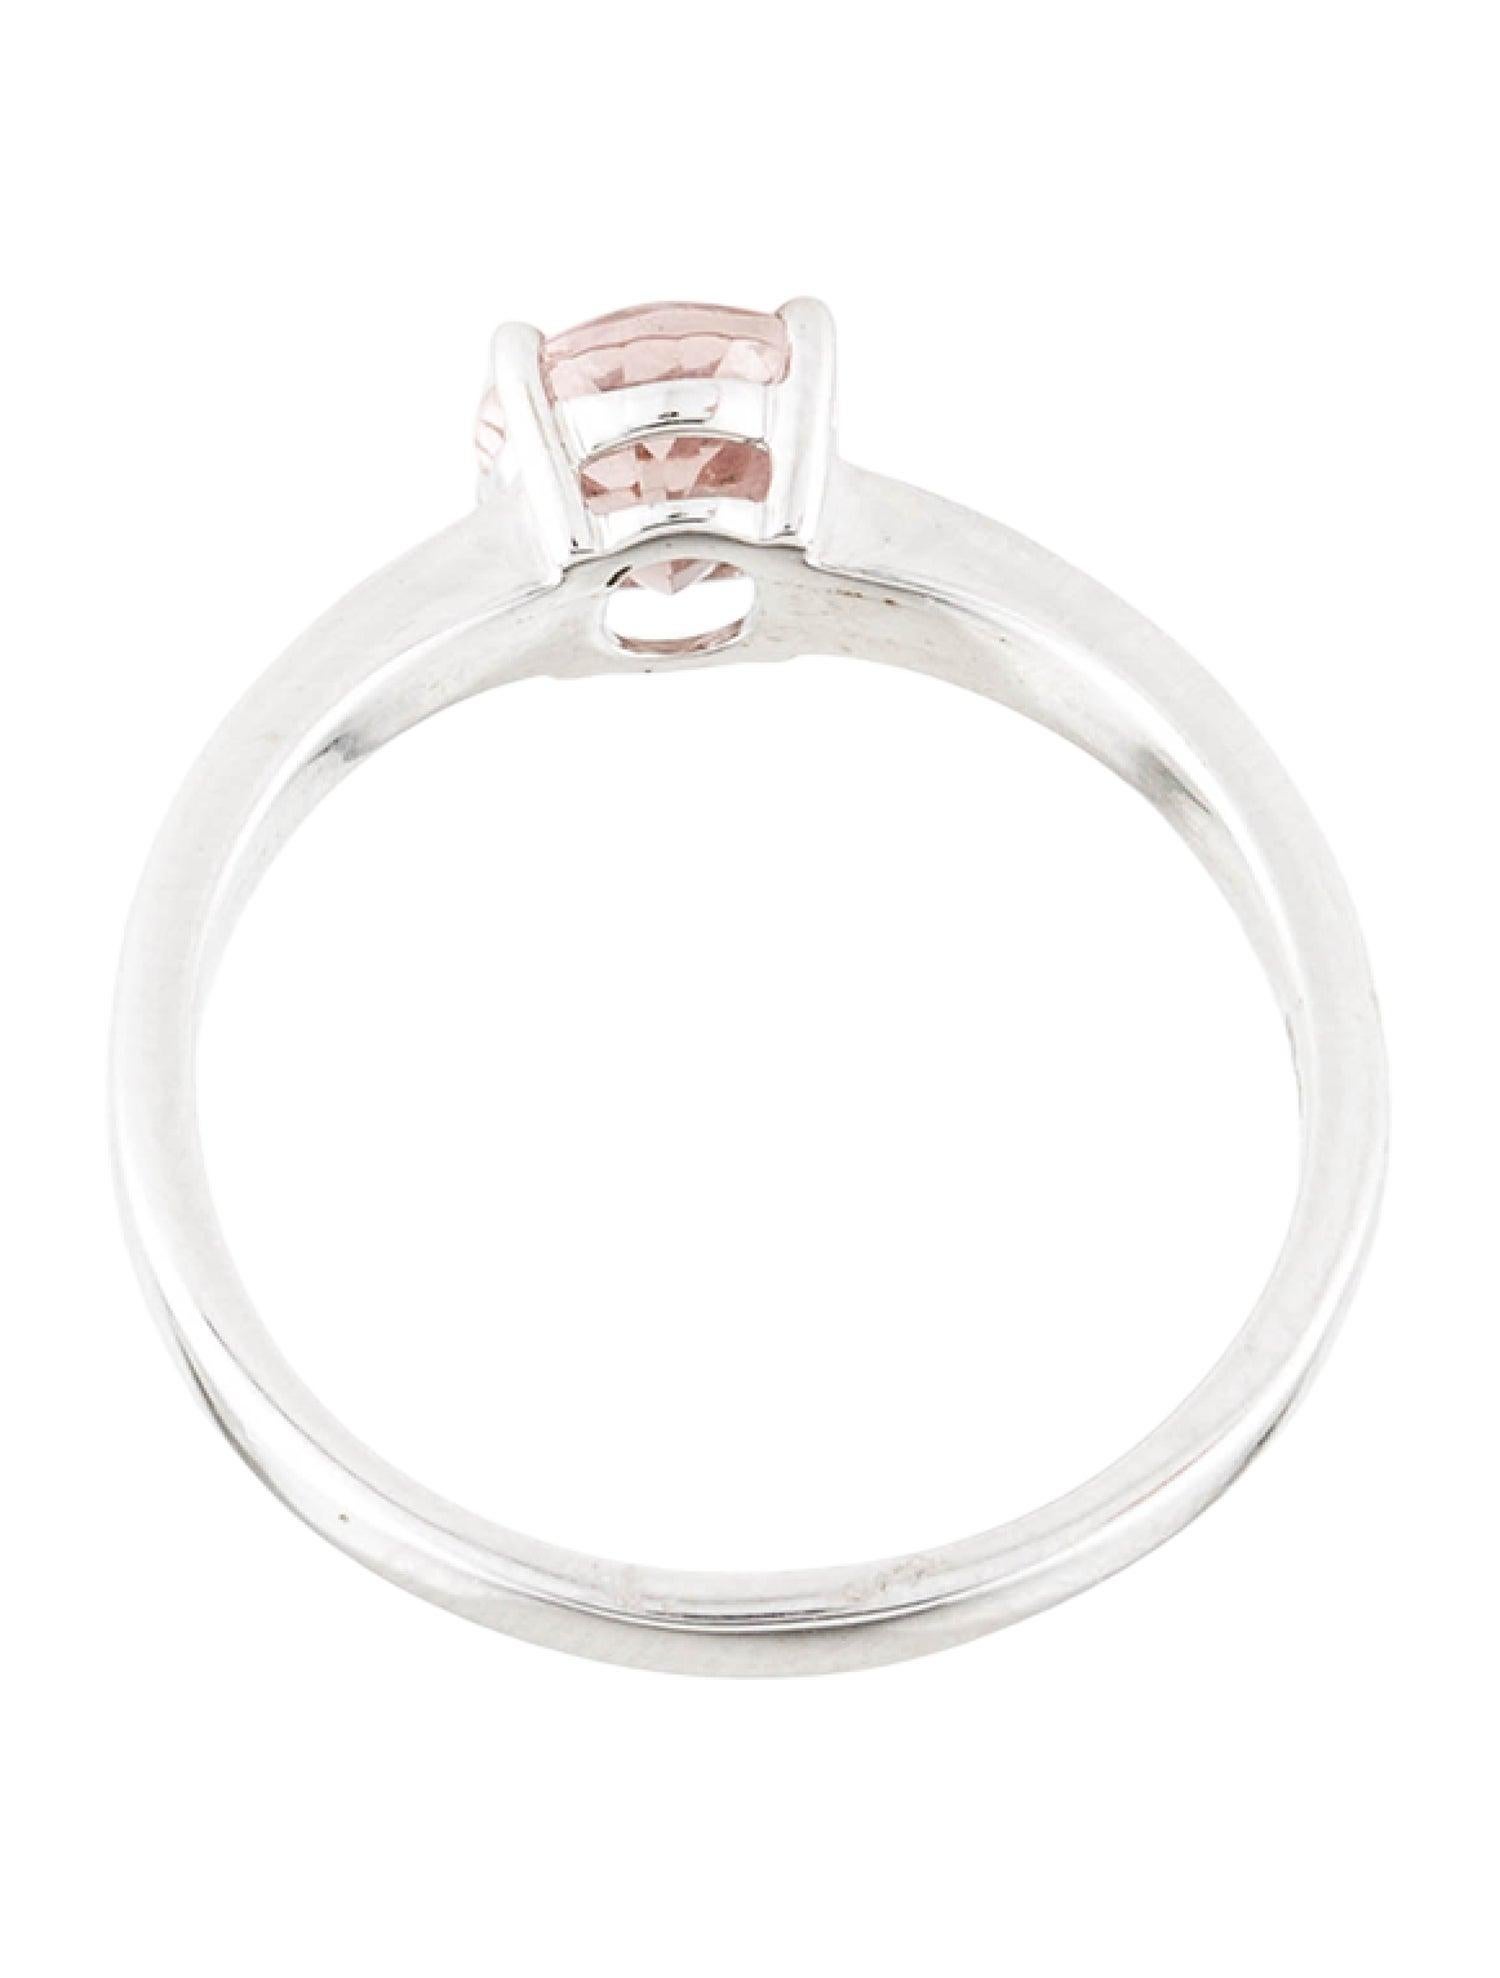 Women's or Men's Elegant 14K White Gold Oval Morganite Cocktail Ring, 0.99 Carat, Size 7.75 For Sale